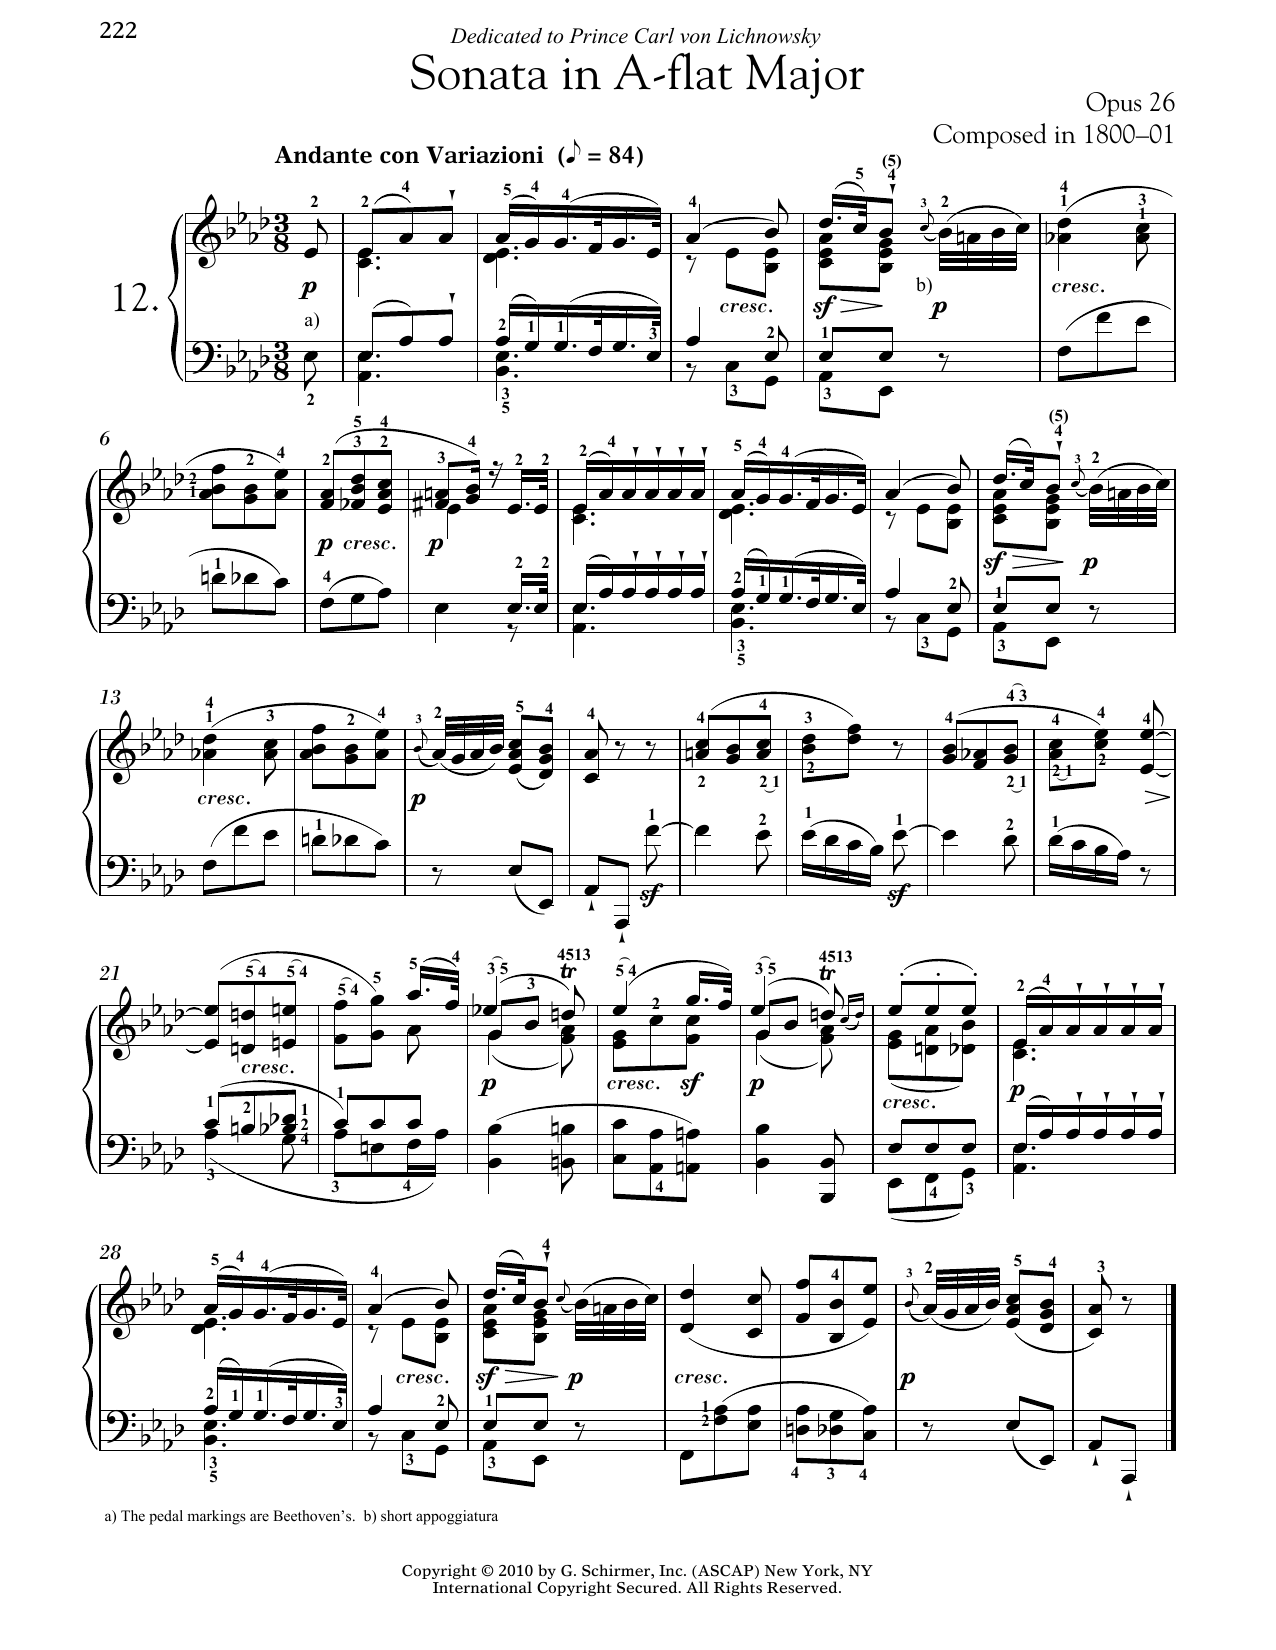 Ludwig van Beethoven Piano Sonata No. 12 In A-flat Major, Op. 26 Sheet Music Notes & Chords for Piano - Download or Print PDF